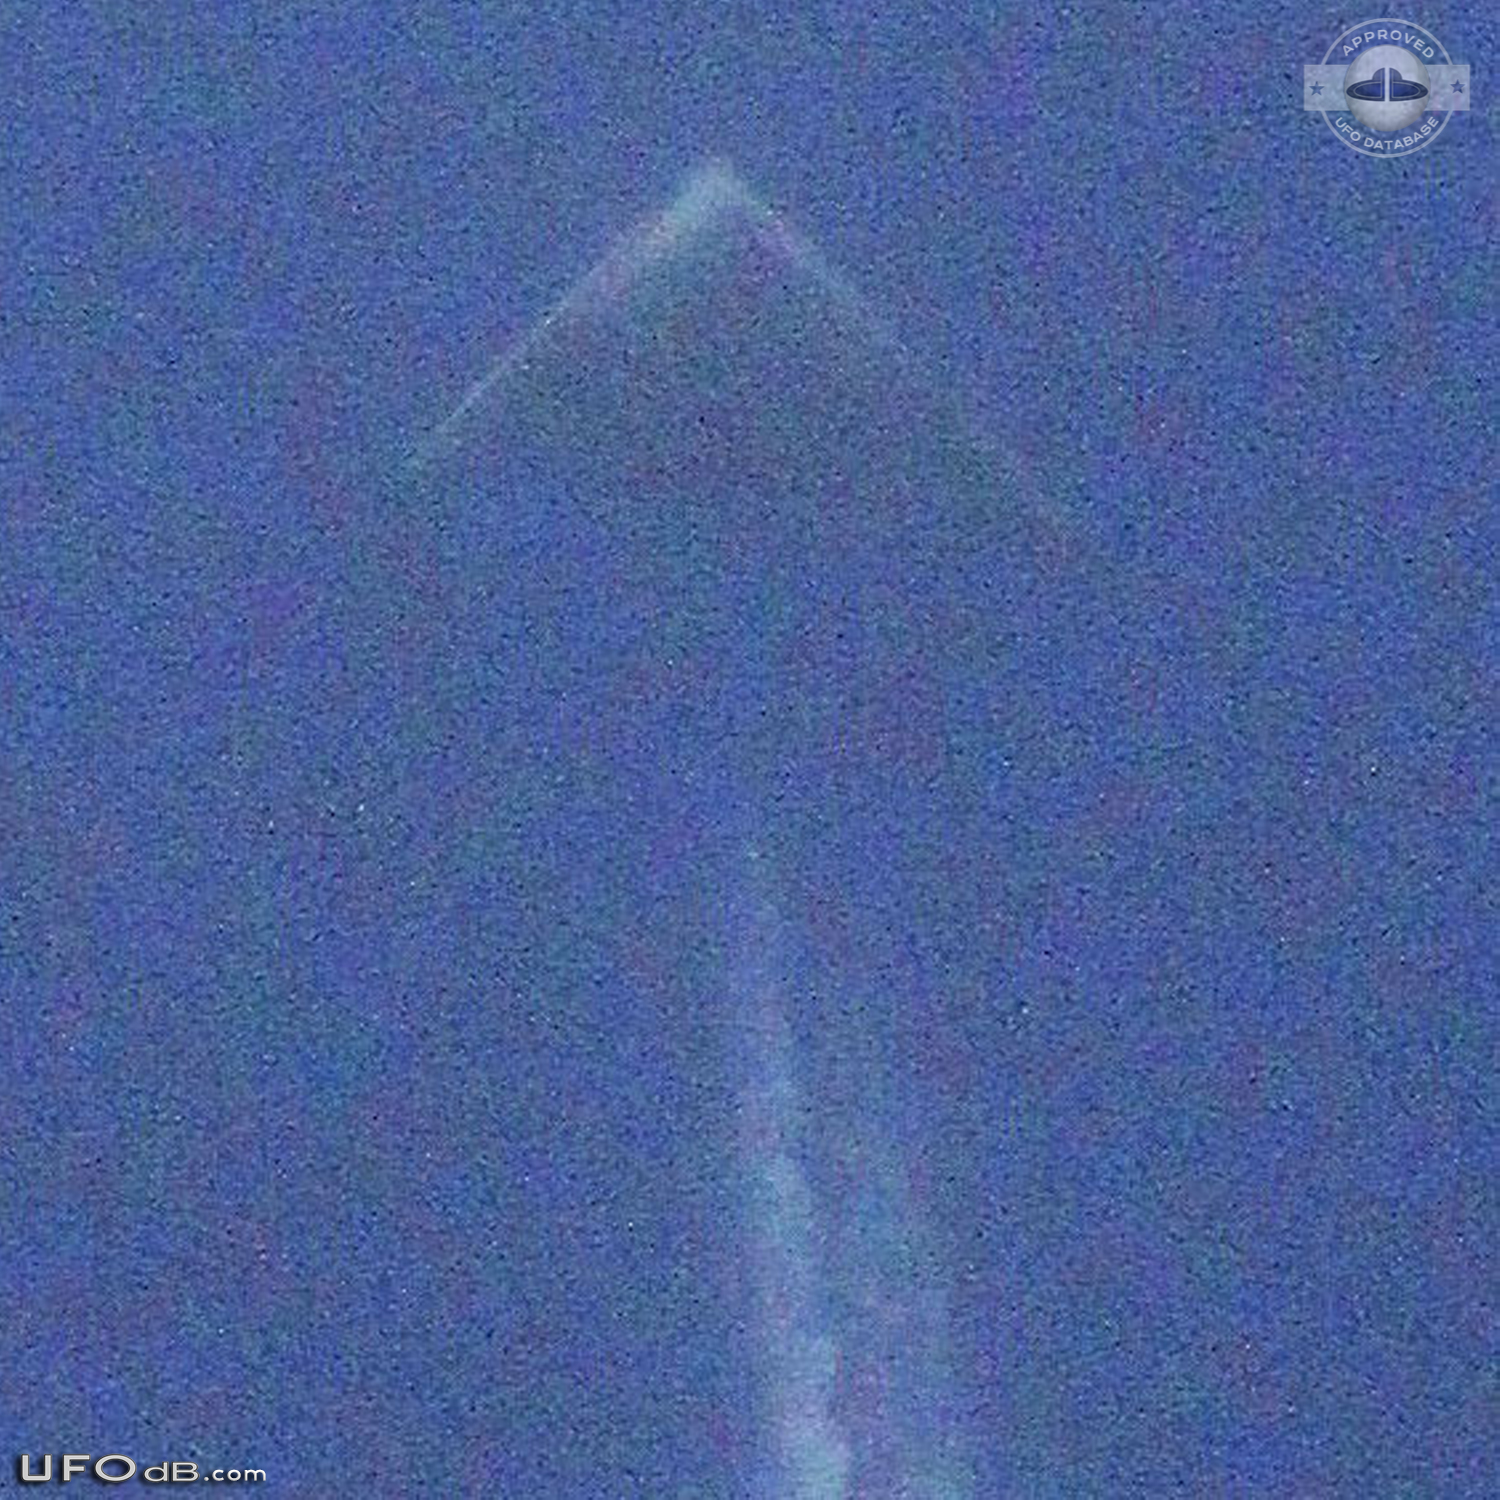 Photographer in Wichita, Kansas capture triangular UFO in bright day UFO Picture #563-1